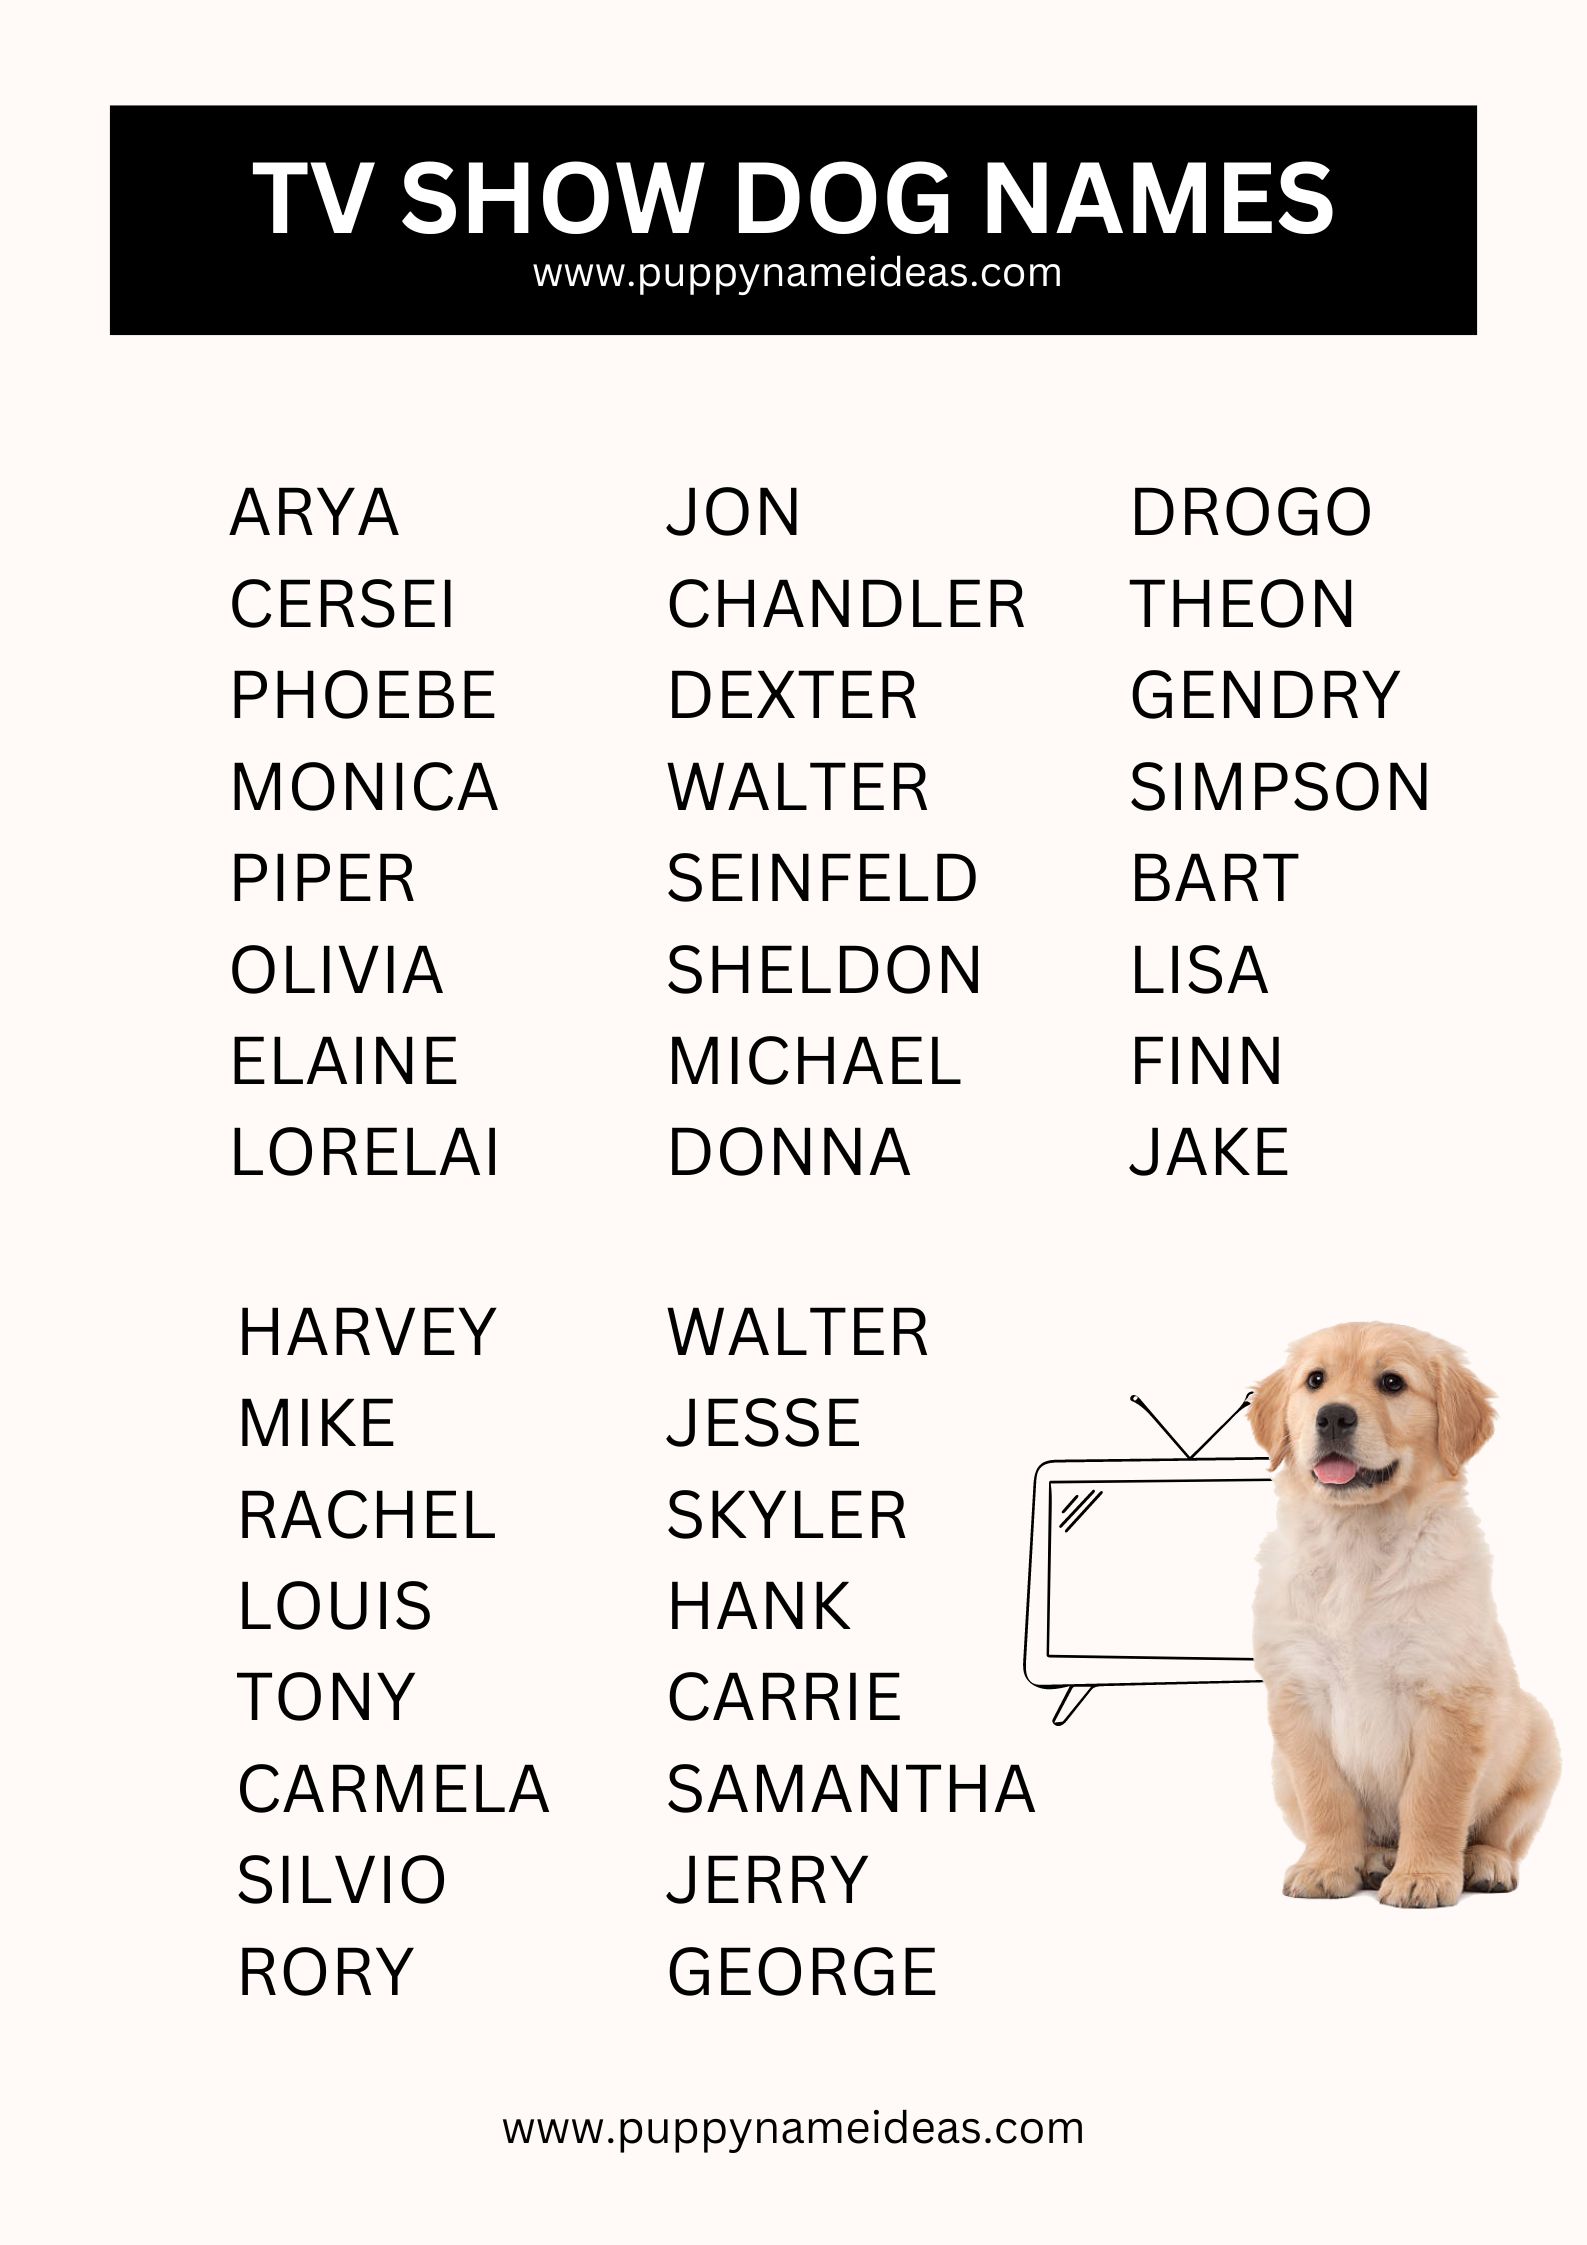 List of TV Show Dog Names